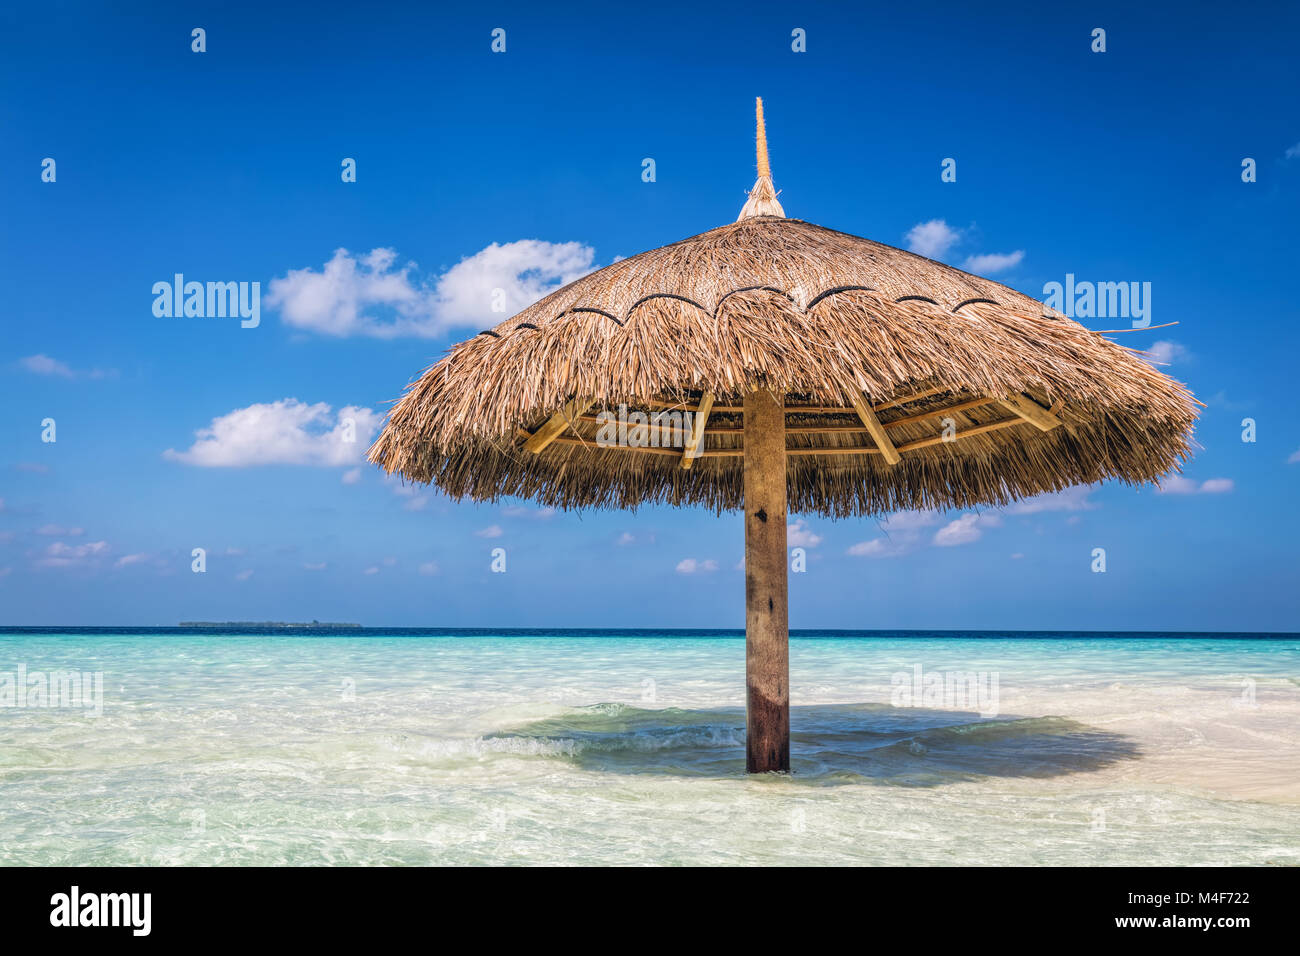 Tropical sandbank island with sunshade umbrella. Indian Ocean, Maldives. Stock Photo